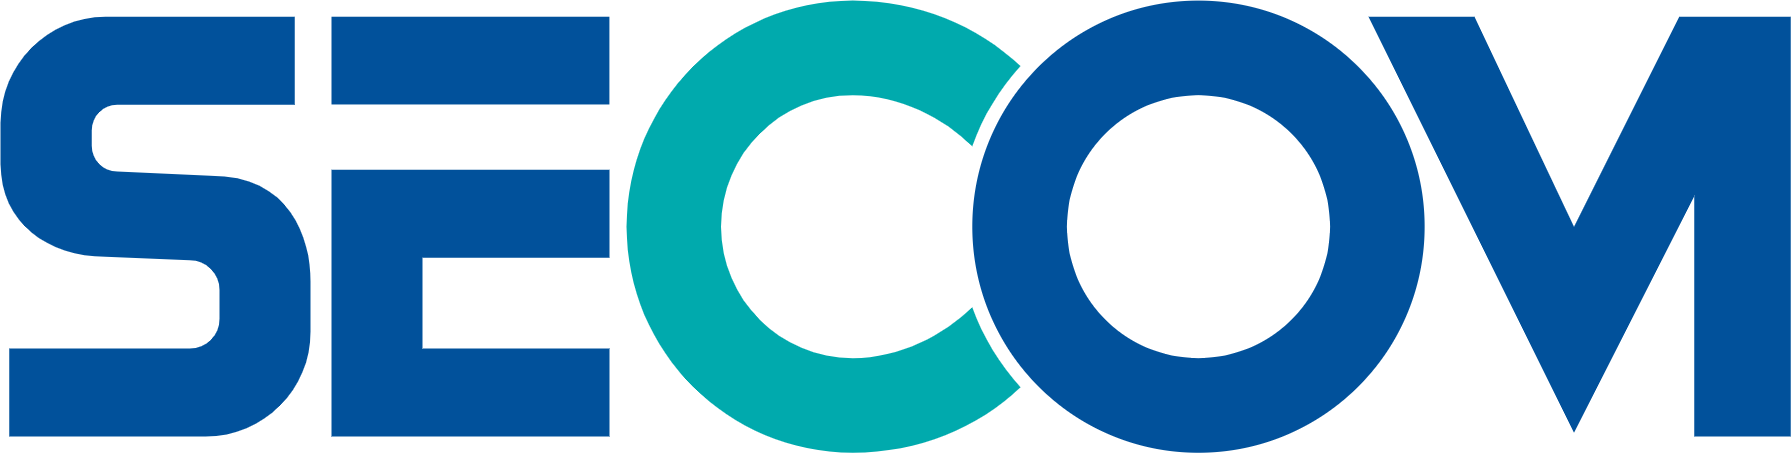 Secom
 logo (PNG transparent)